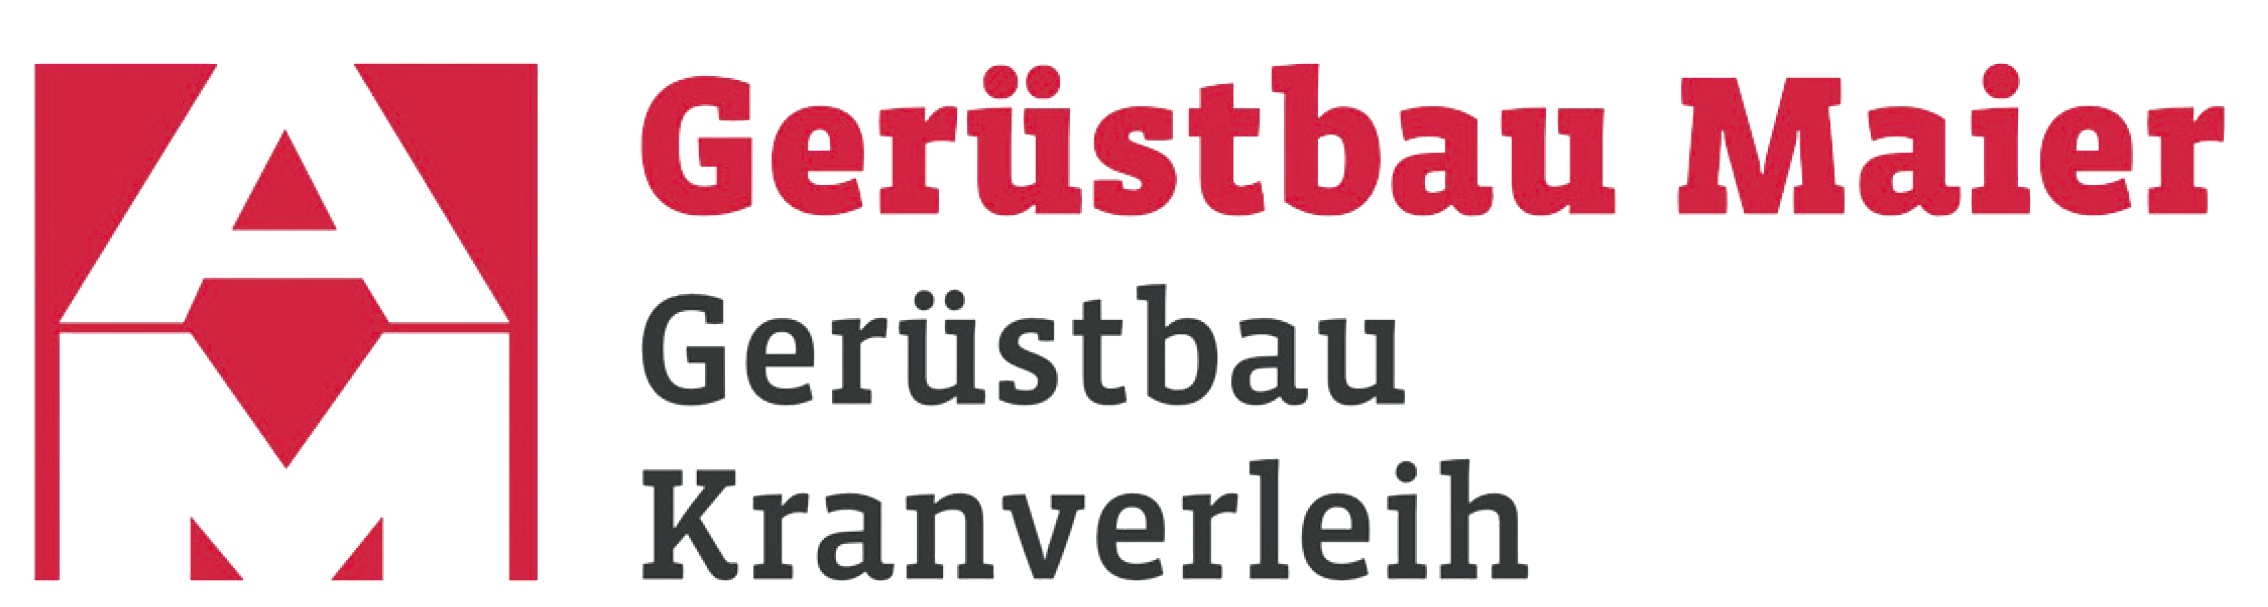 Gerüstbau Maier Logo